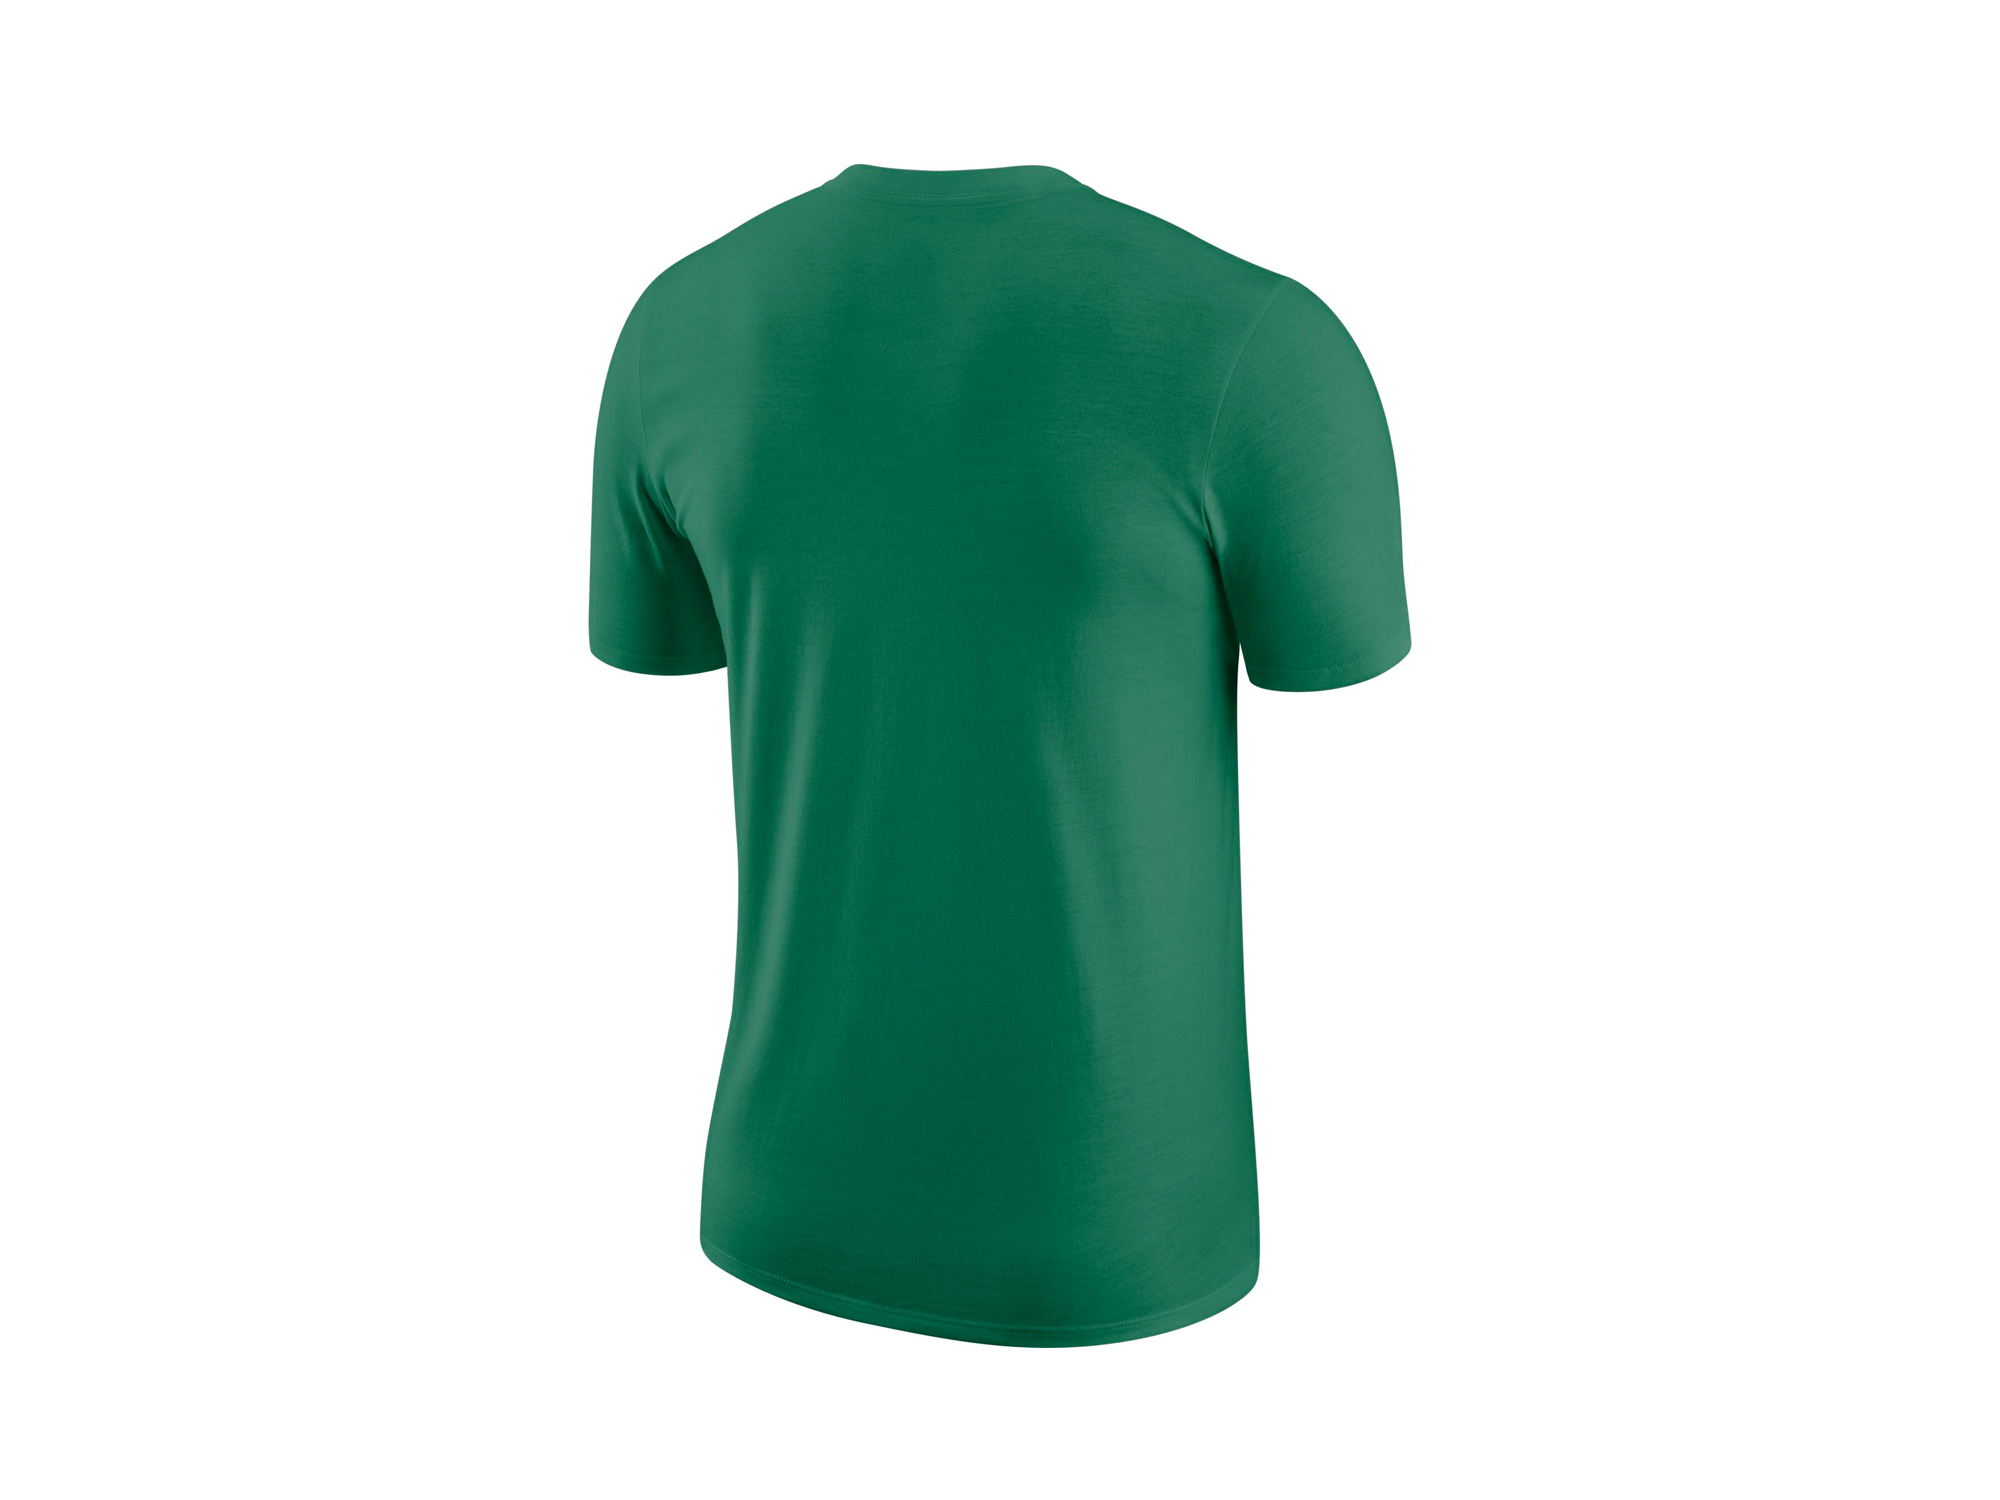 Nike Boston Celtics NBA City Edition Logo T-Shirt